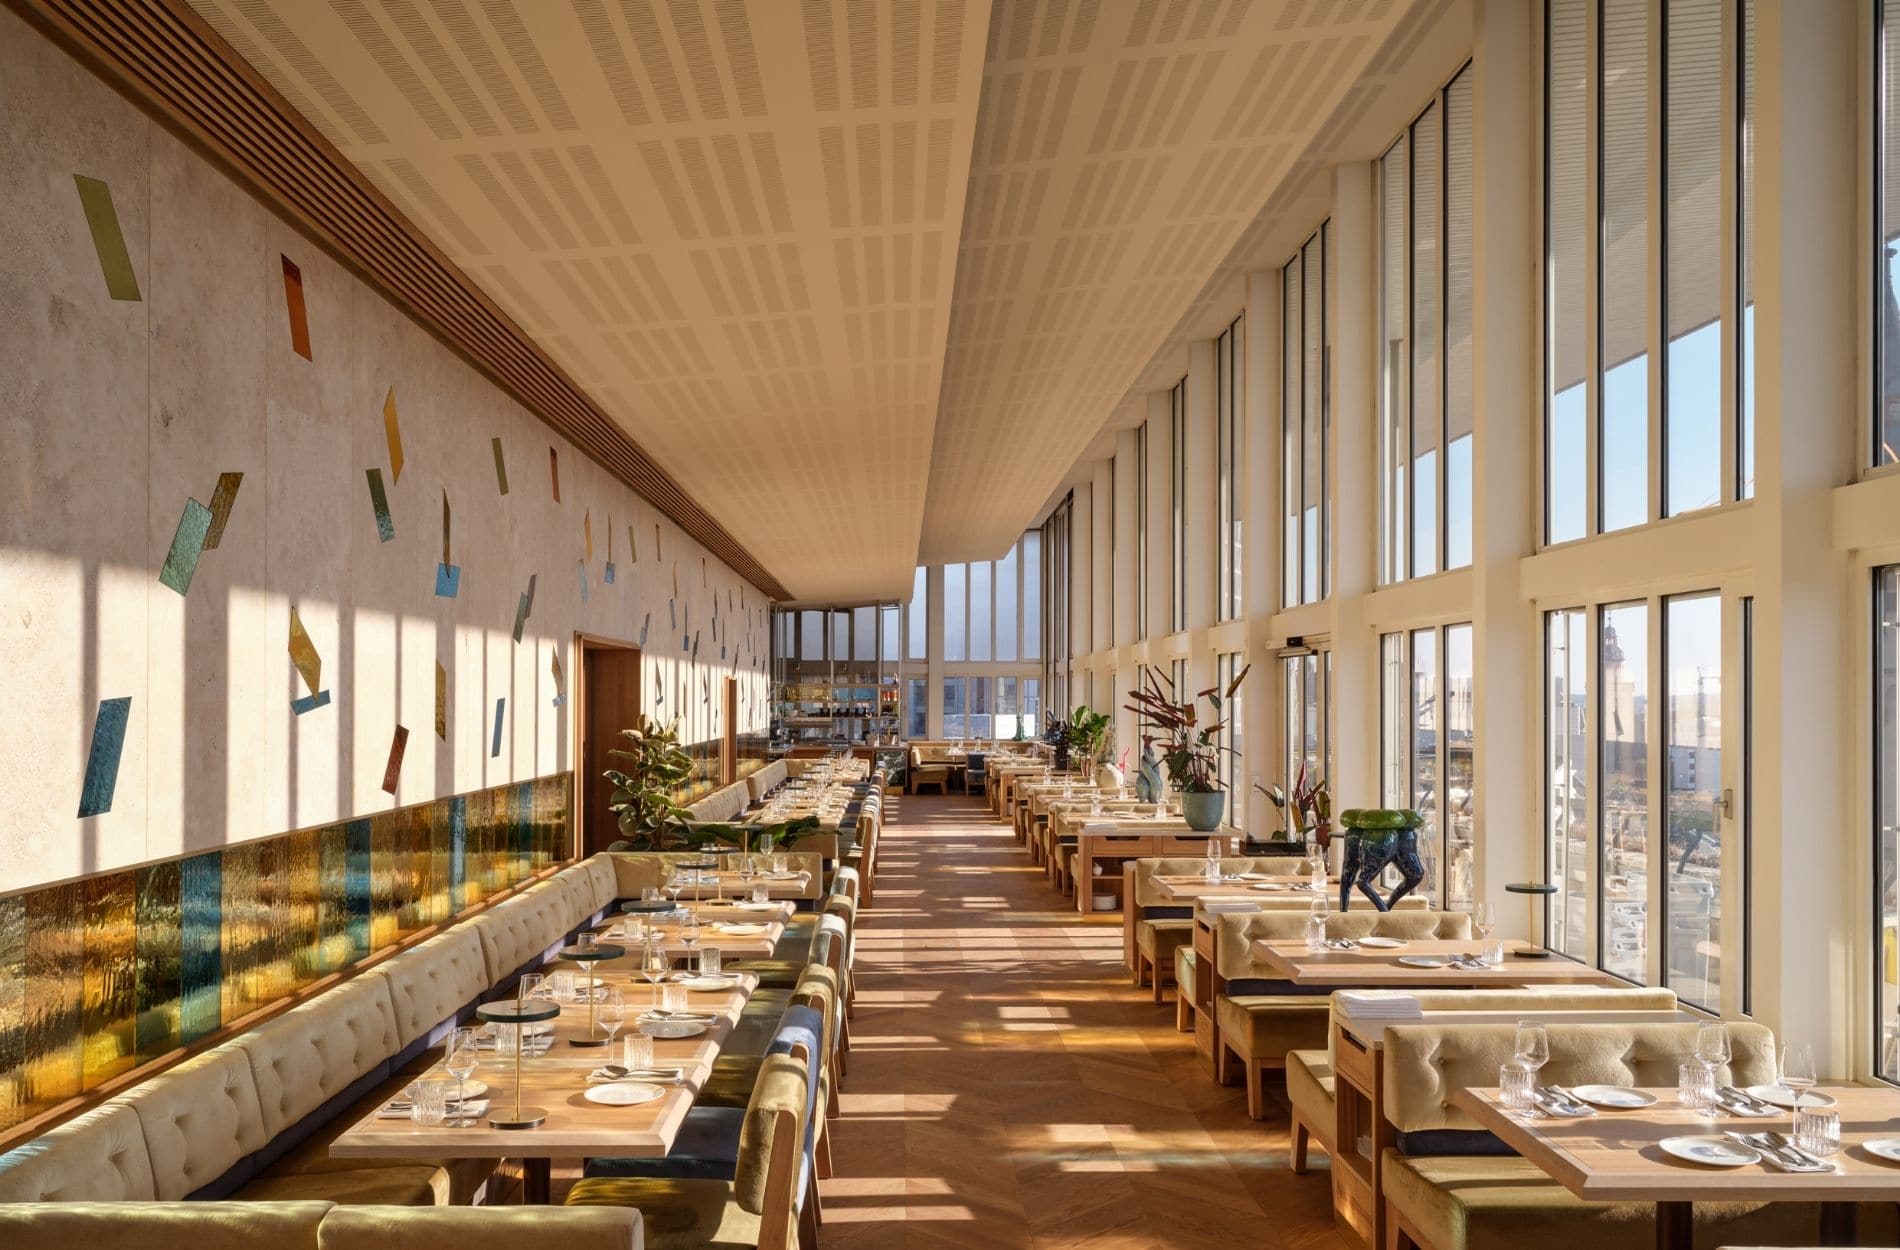 Flemings Hotels: Neues Restaurant “Occhio d’Oro” in Frankfurt